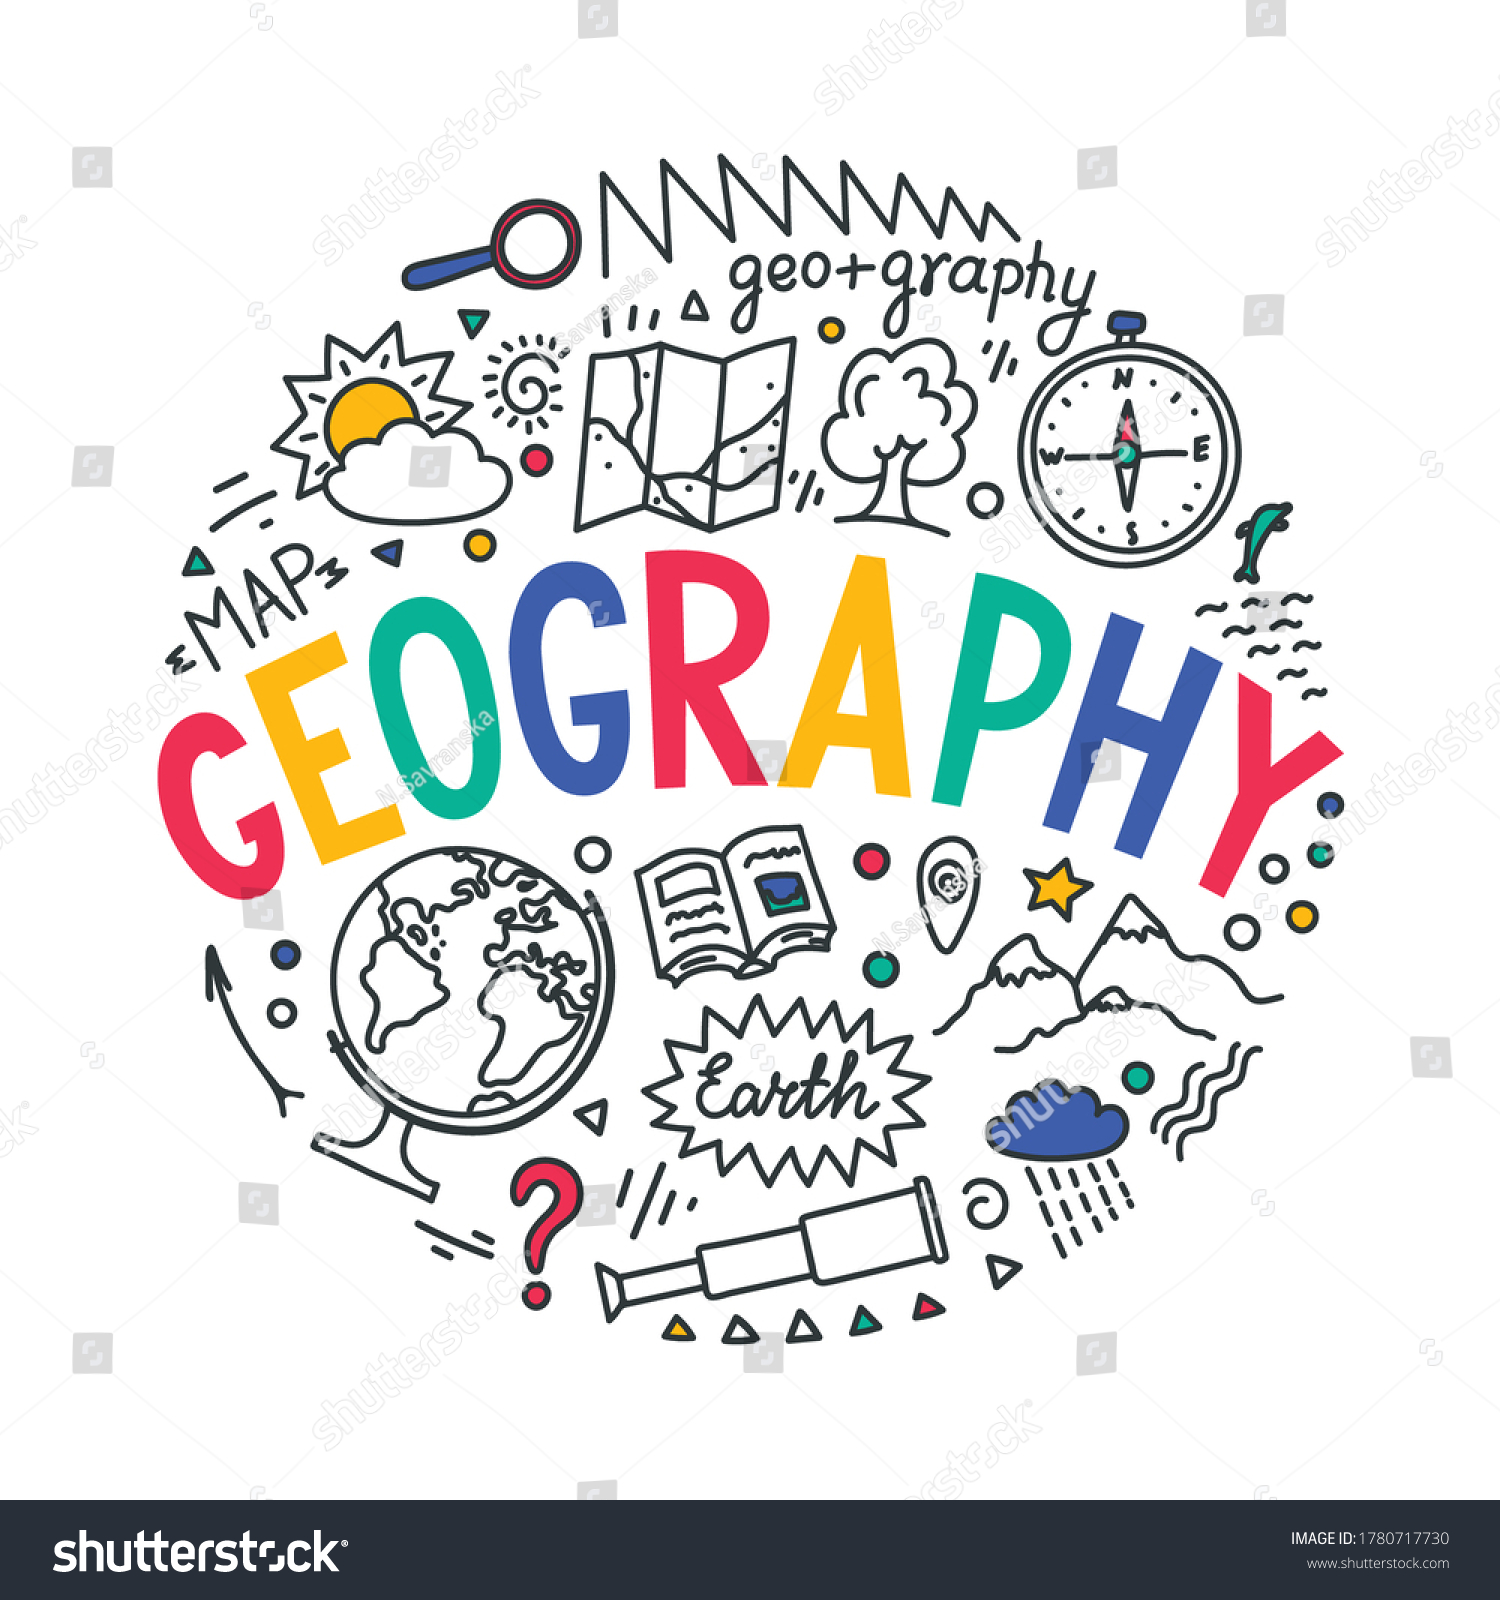 Geography Hand Drawn Word Geography Educational เวกเตอร์สต็อก ปลอดค่าลิขสิทธิ์ 1780717730 1500